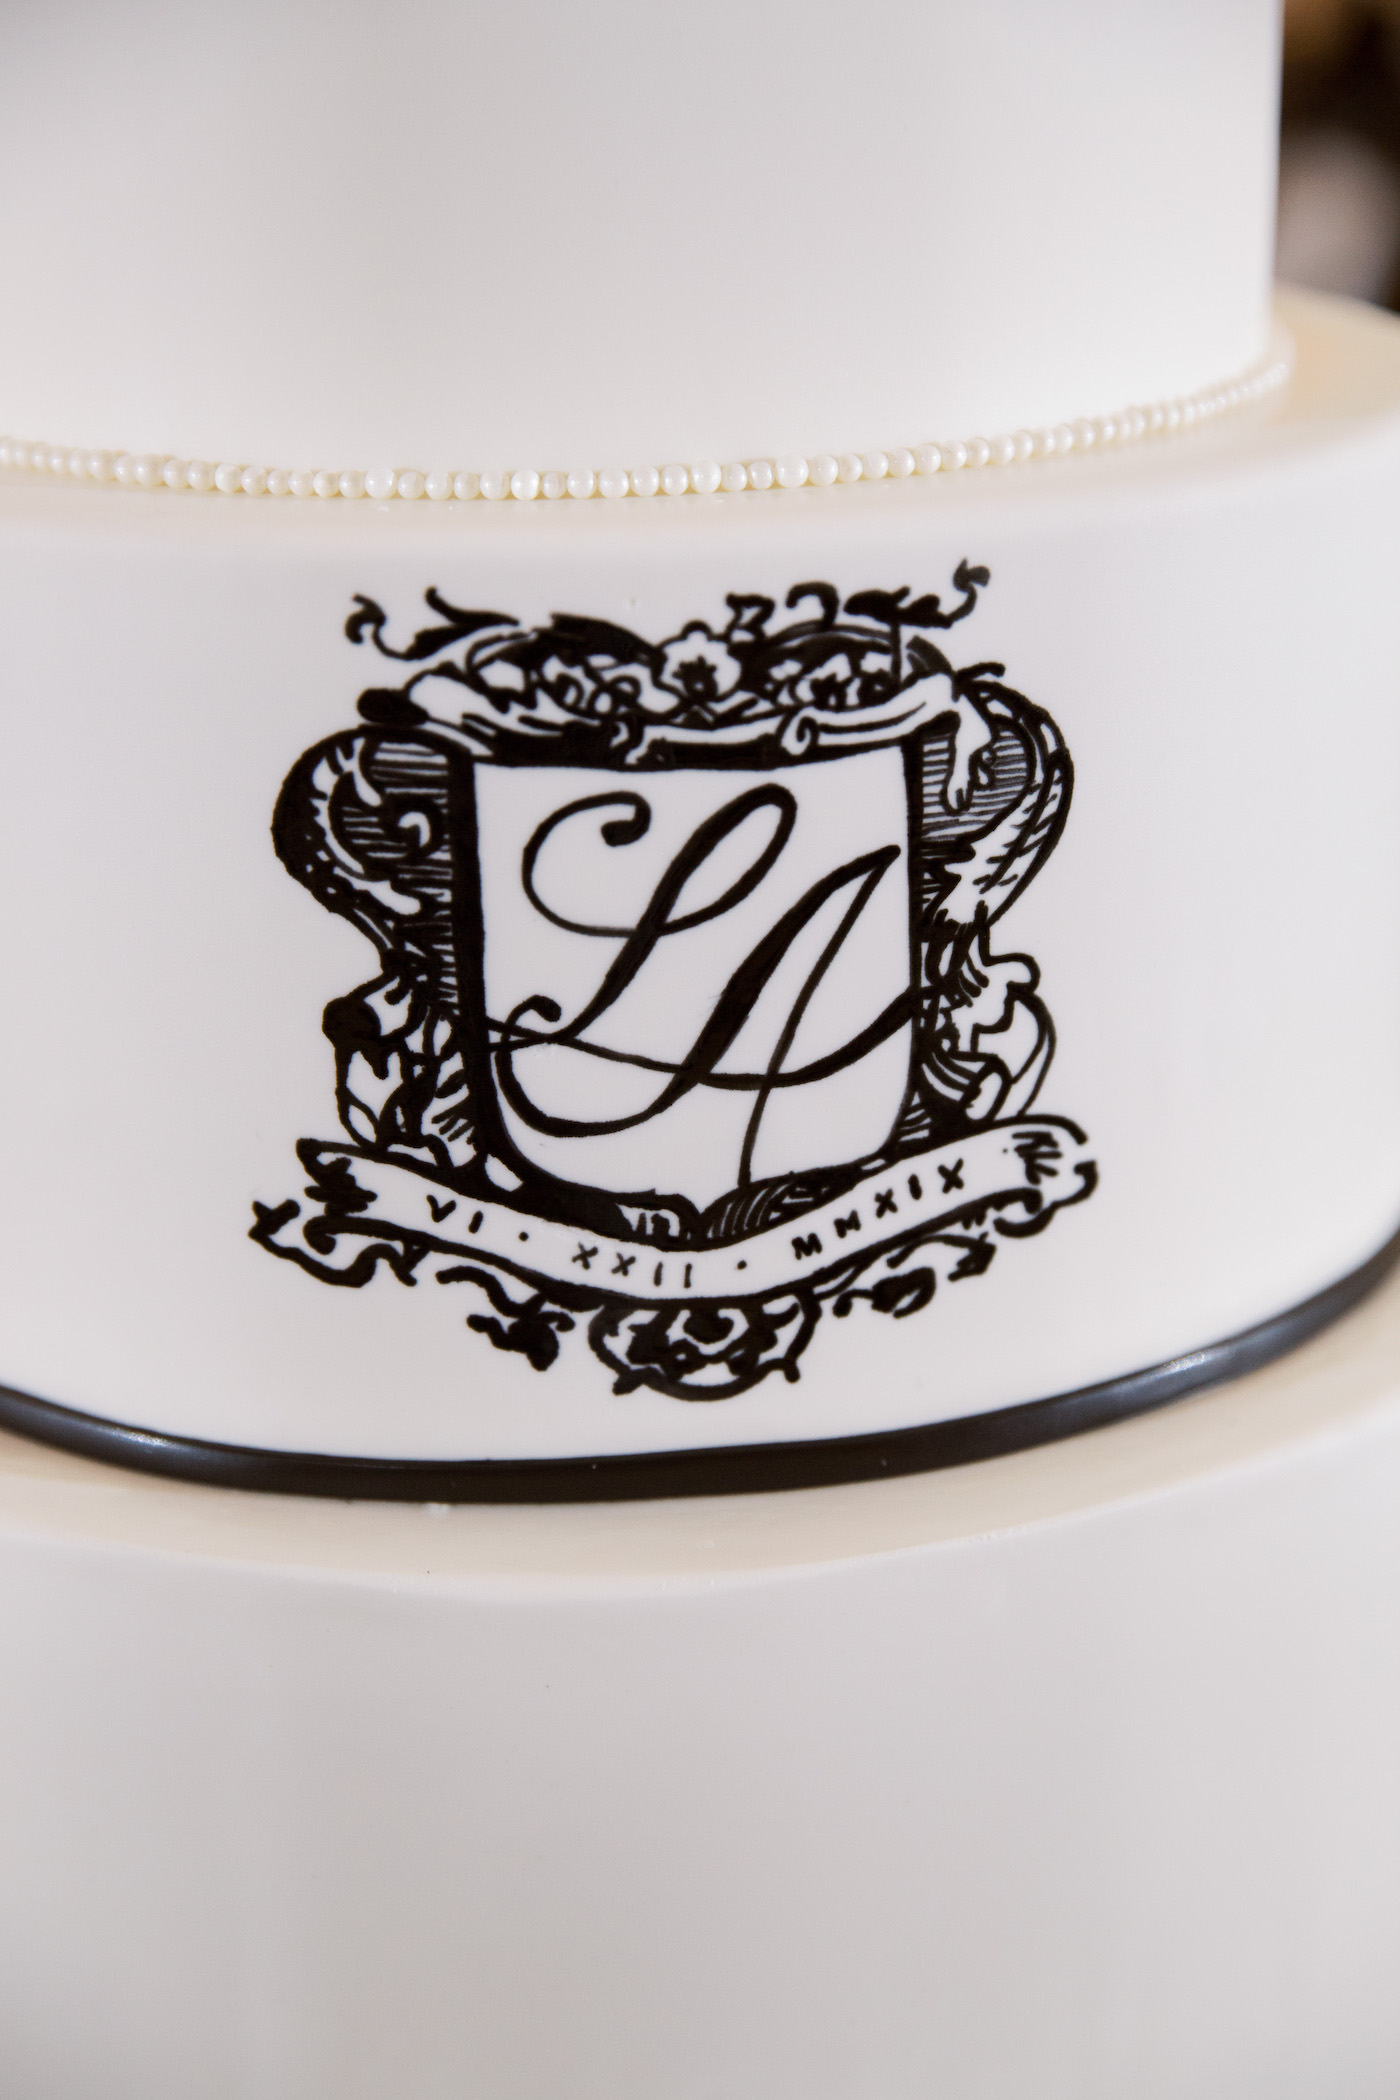 Classic Elegant White Wedding Cake with Custom Black Monogram